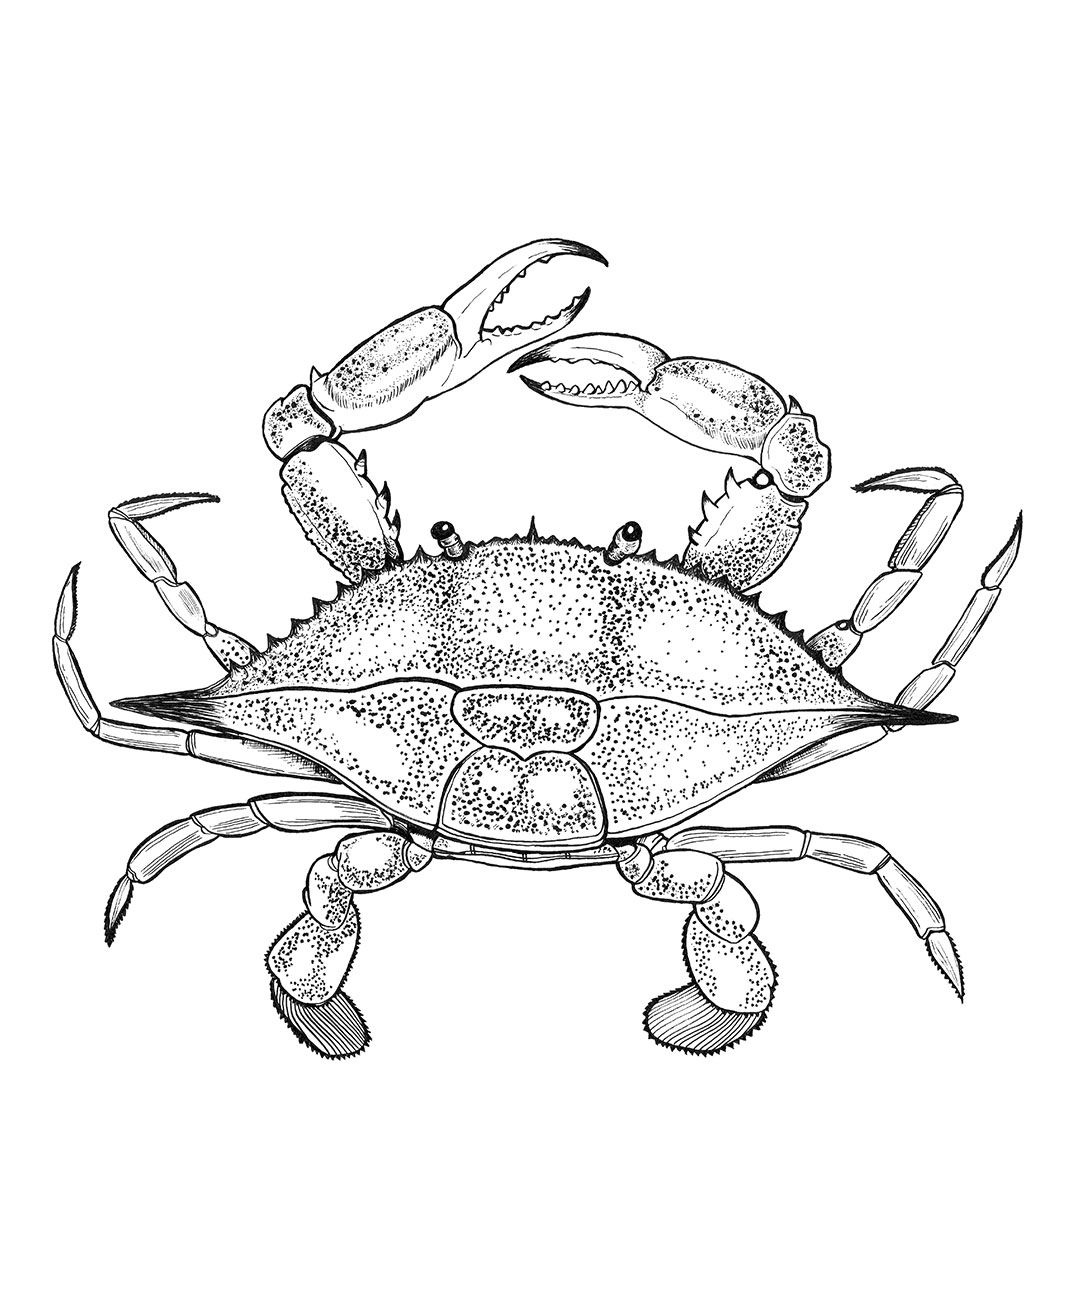 blue crab drawing